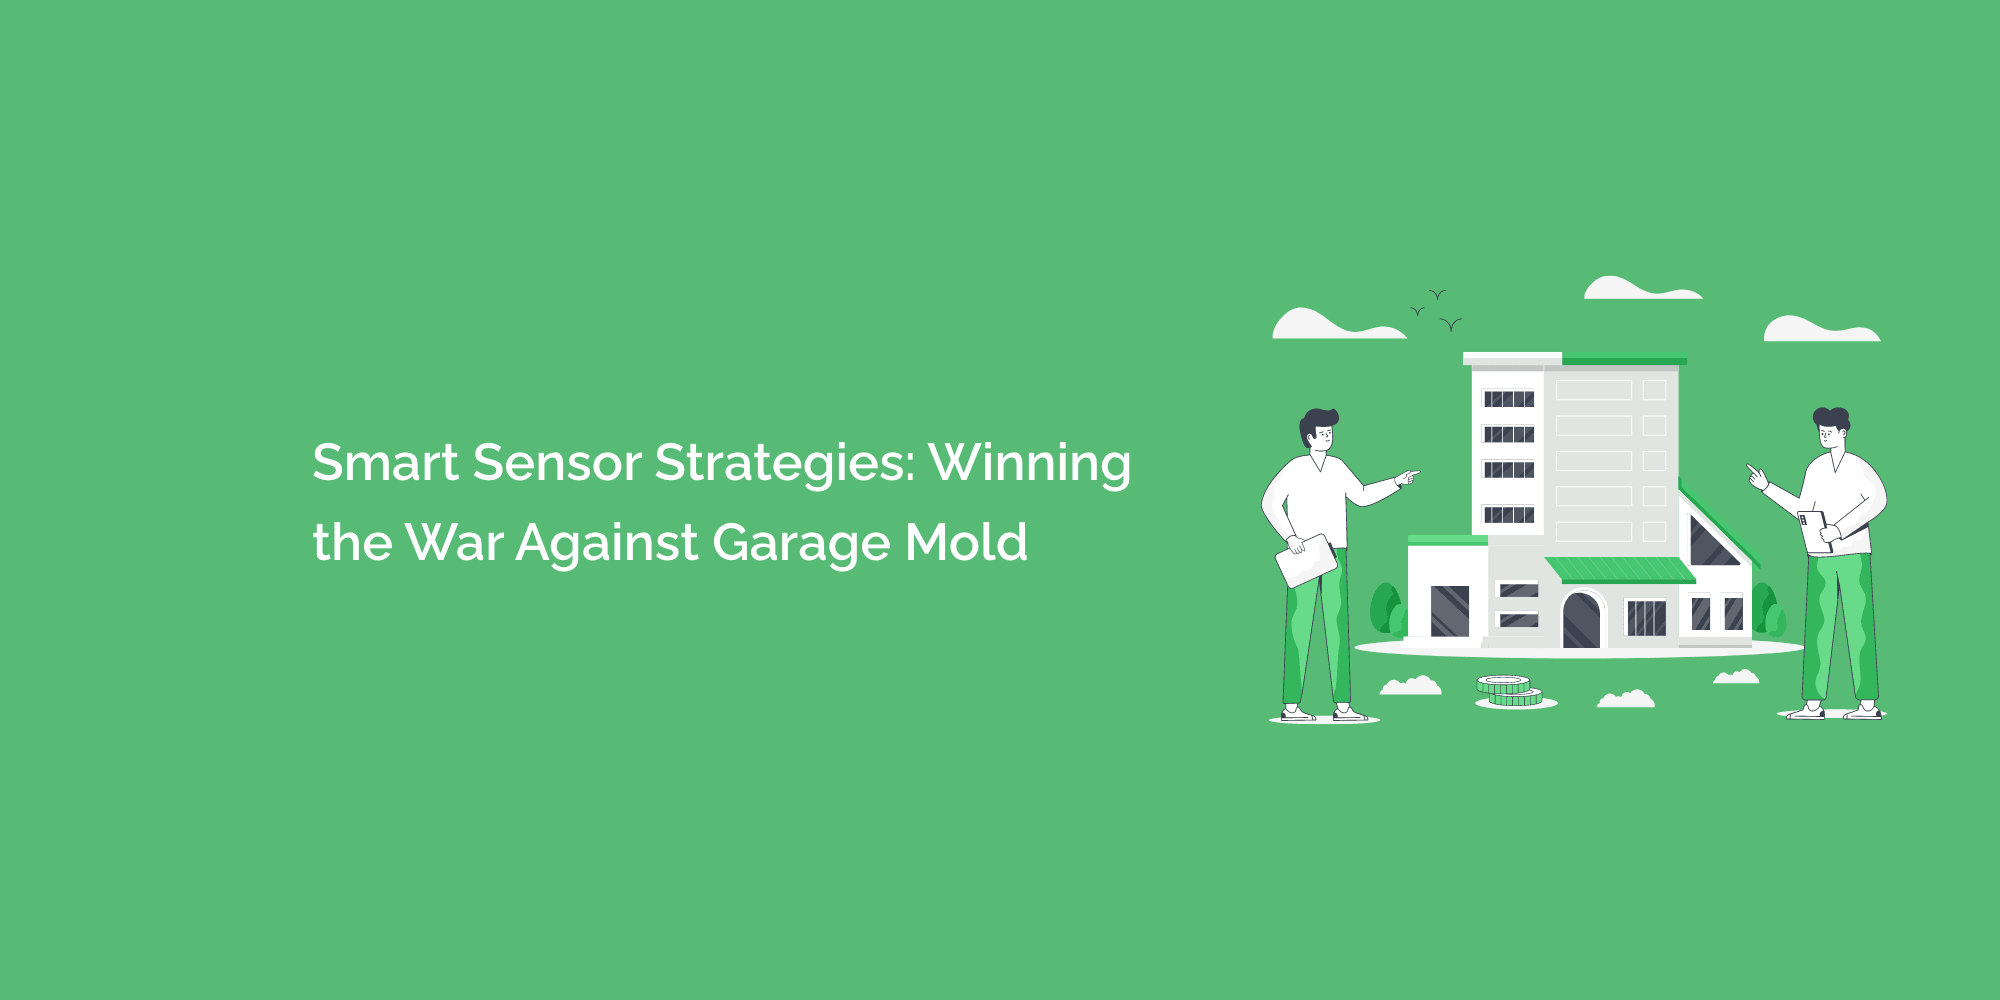 Smart Sensor Strategies: Winning the War Against Garage Mold